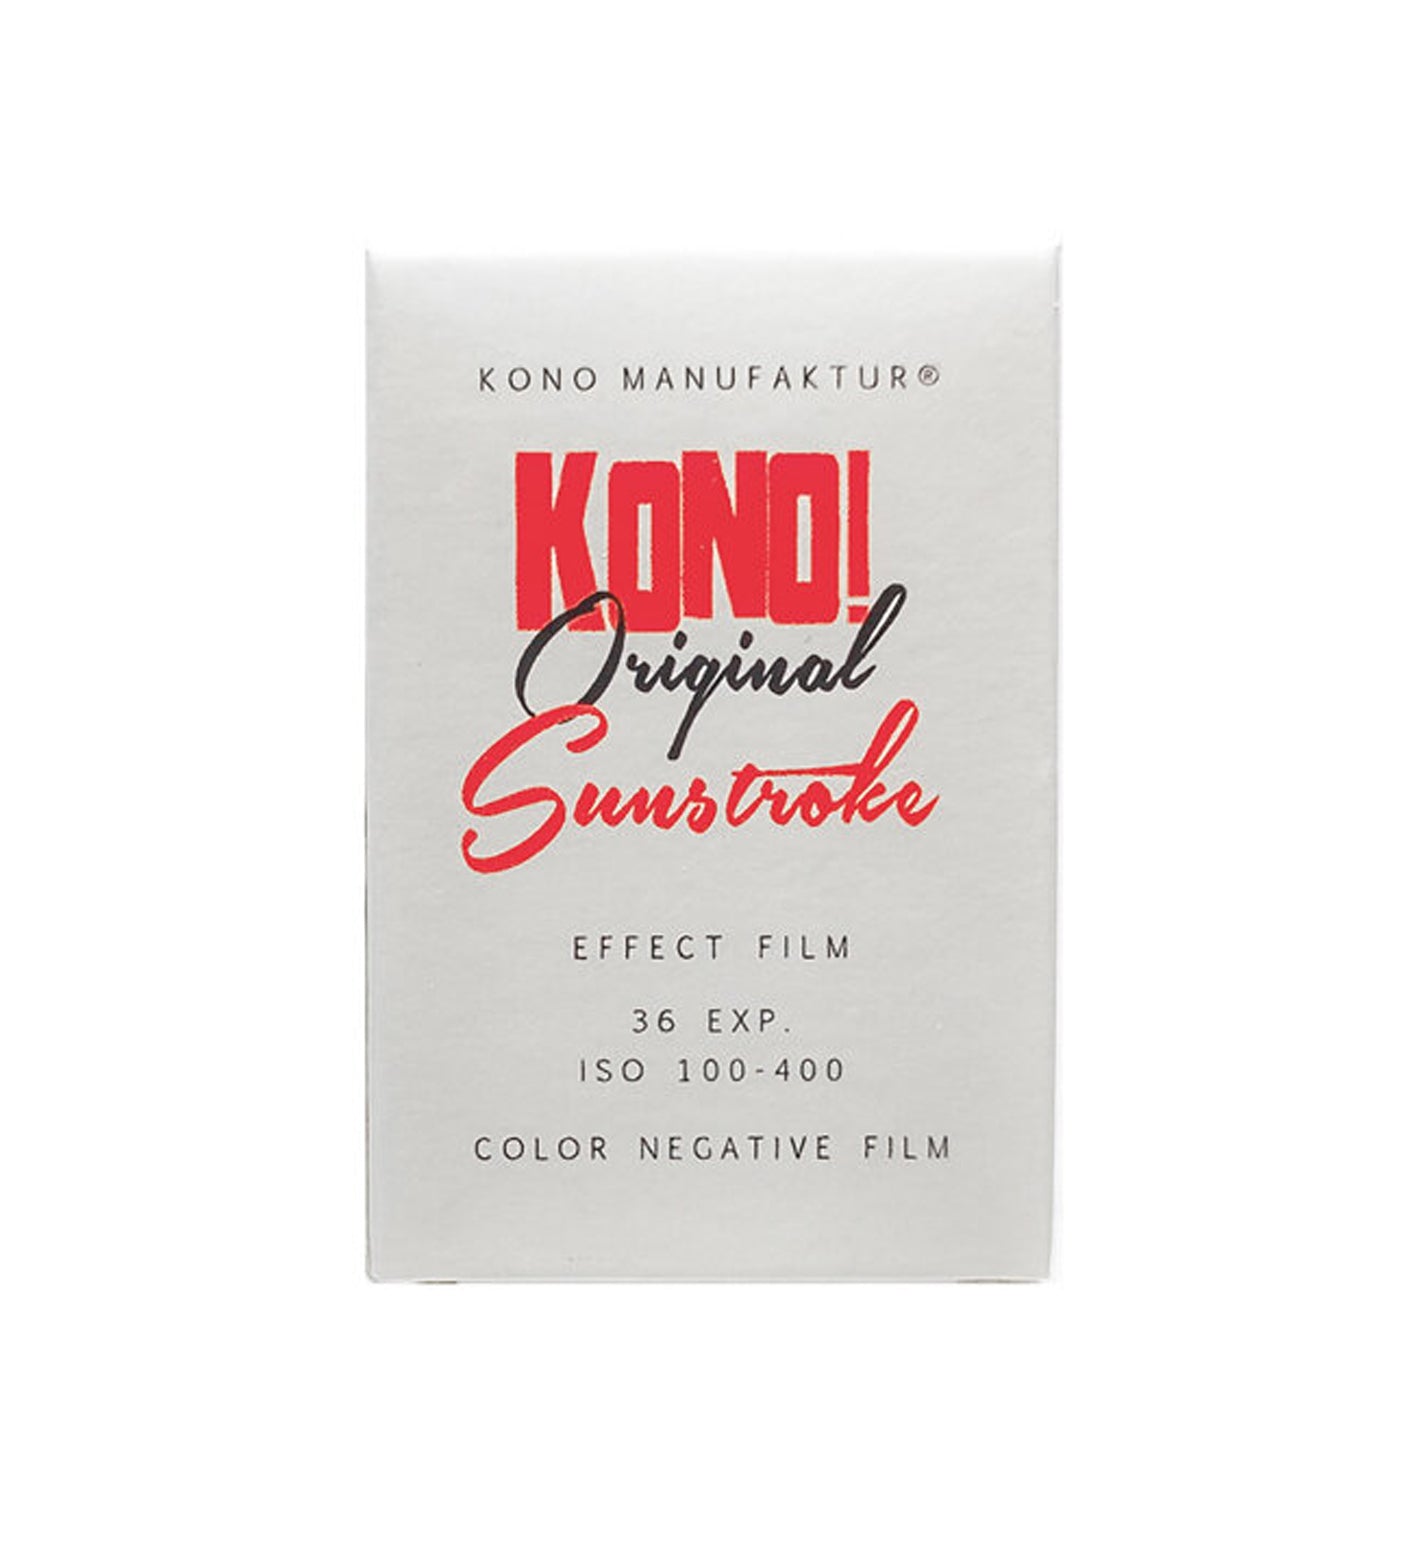 KONO! Original Sunstroke 35mm Film 36 Exposures (£18.99 incl VAT)